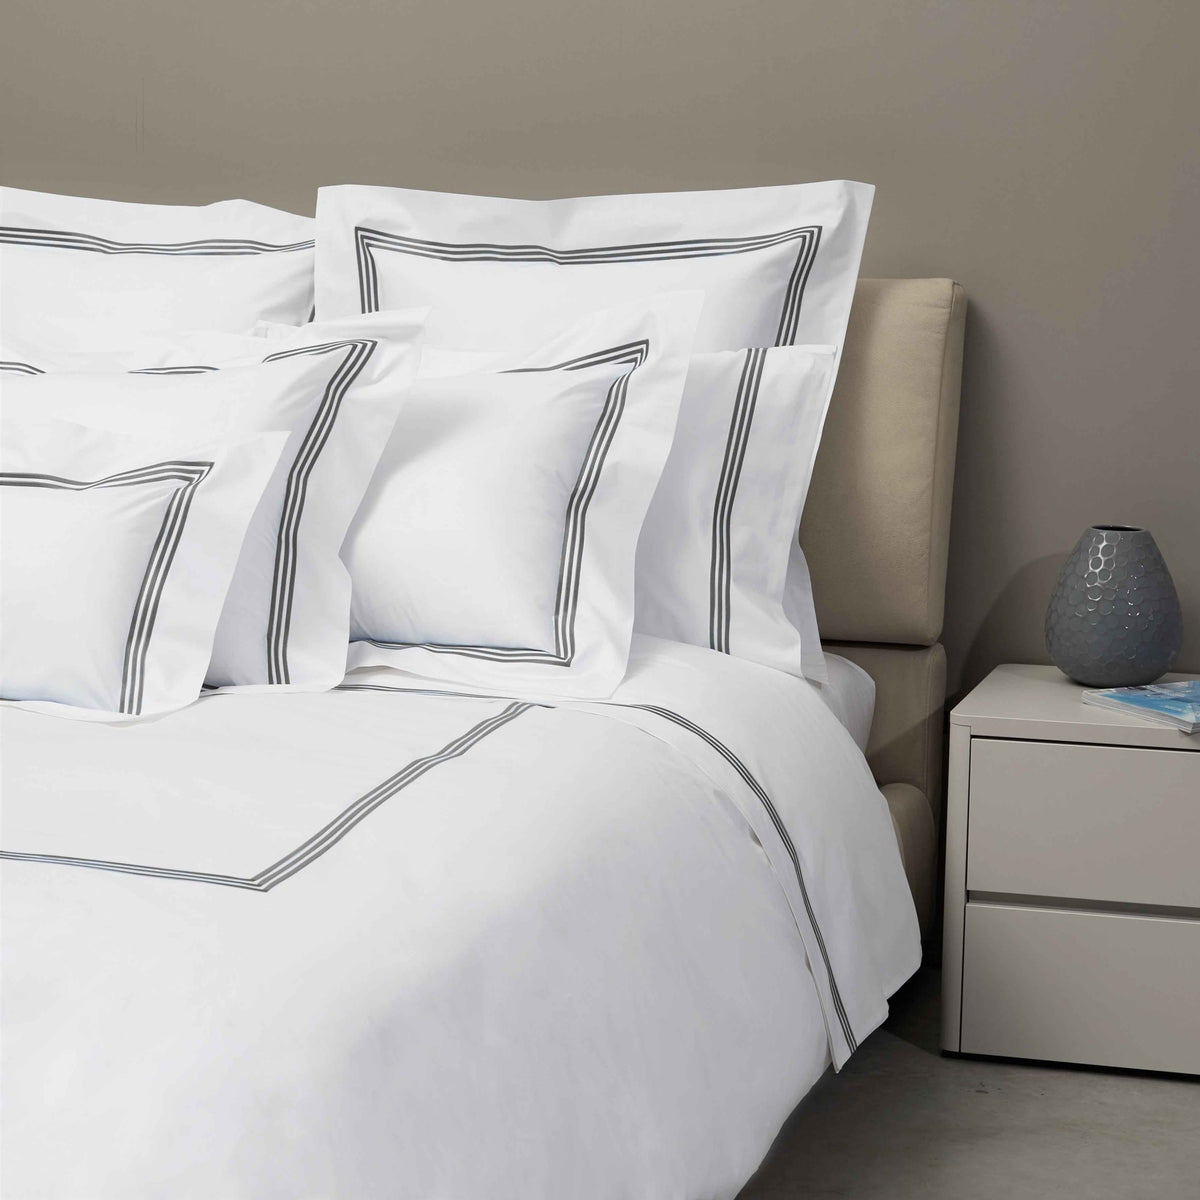 Bed Dressed in Signoria Platinum Percale Bedding in White/Lead Grey Color